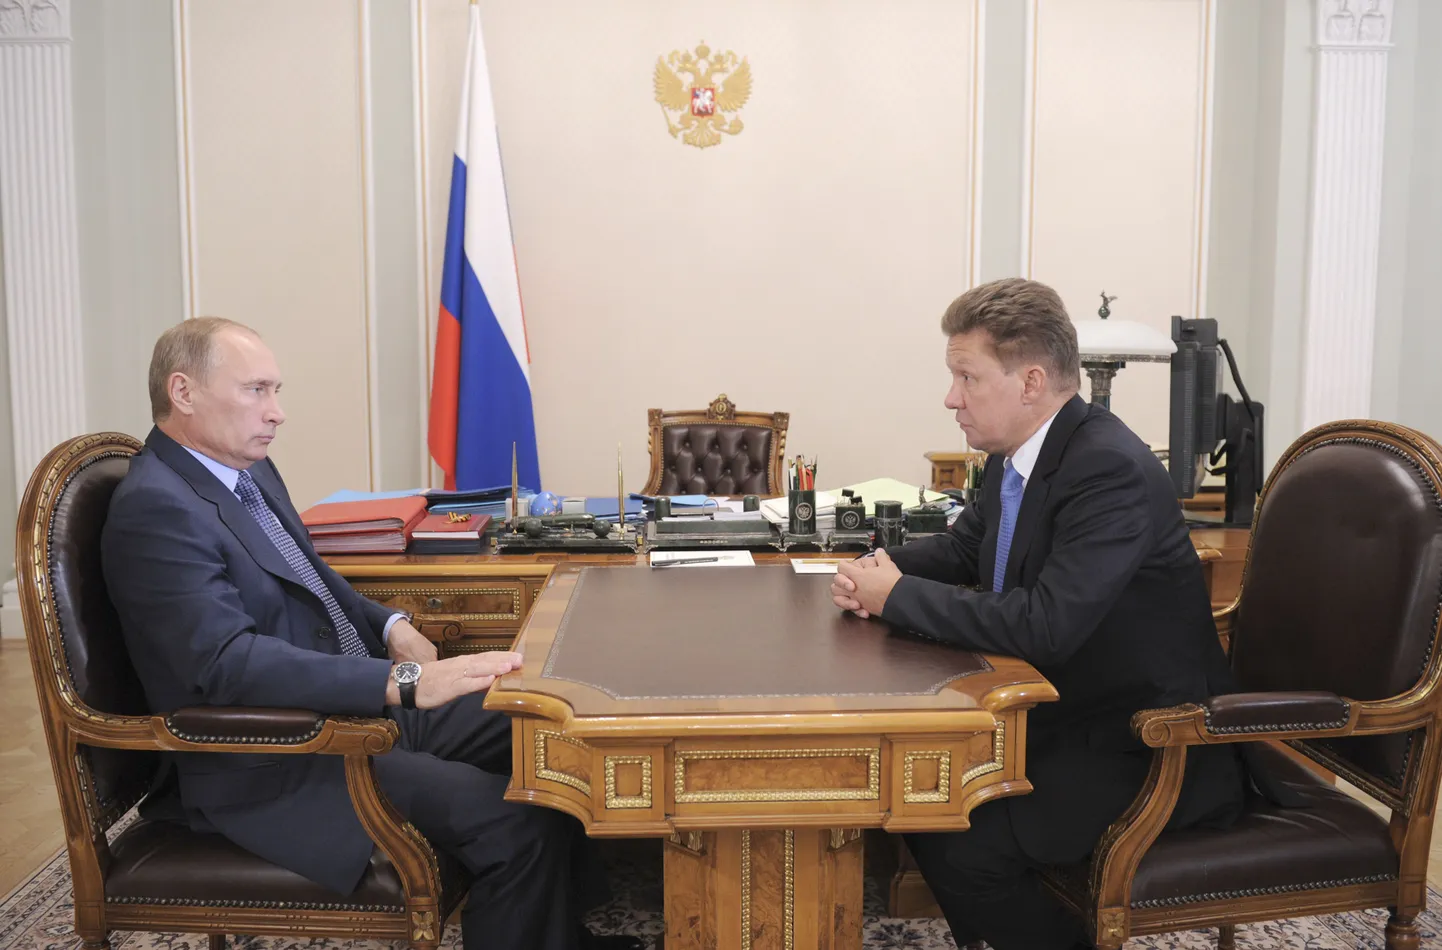 Vene peaminister Vladimir Putin (vasakul) kohtus täna Novo-Ogarjovo residentsis Gazpromi tegevjuhi Aleksei Milleriga.